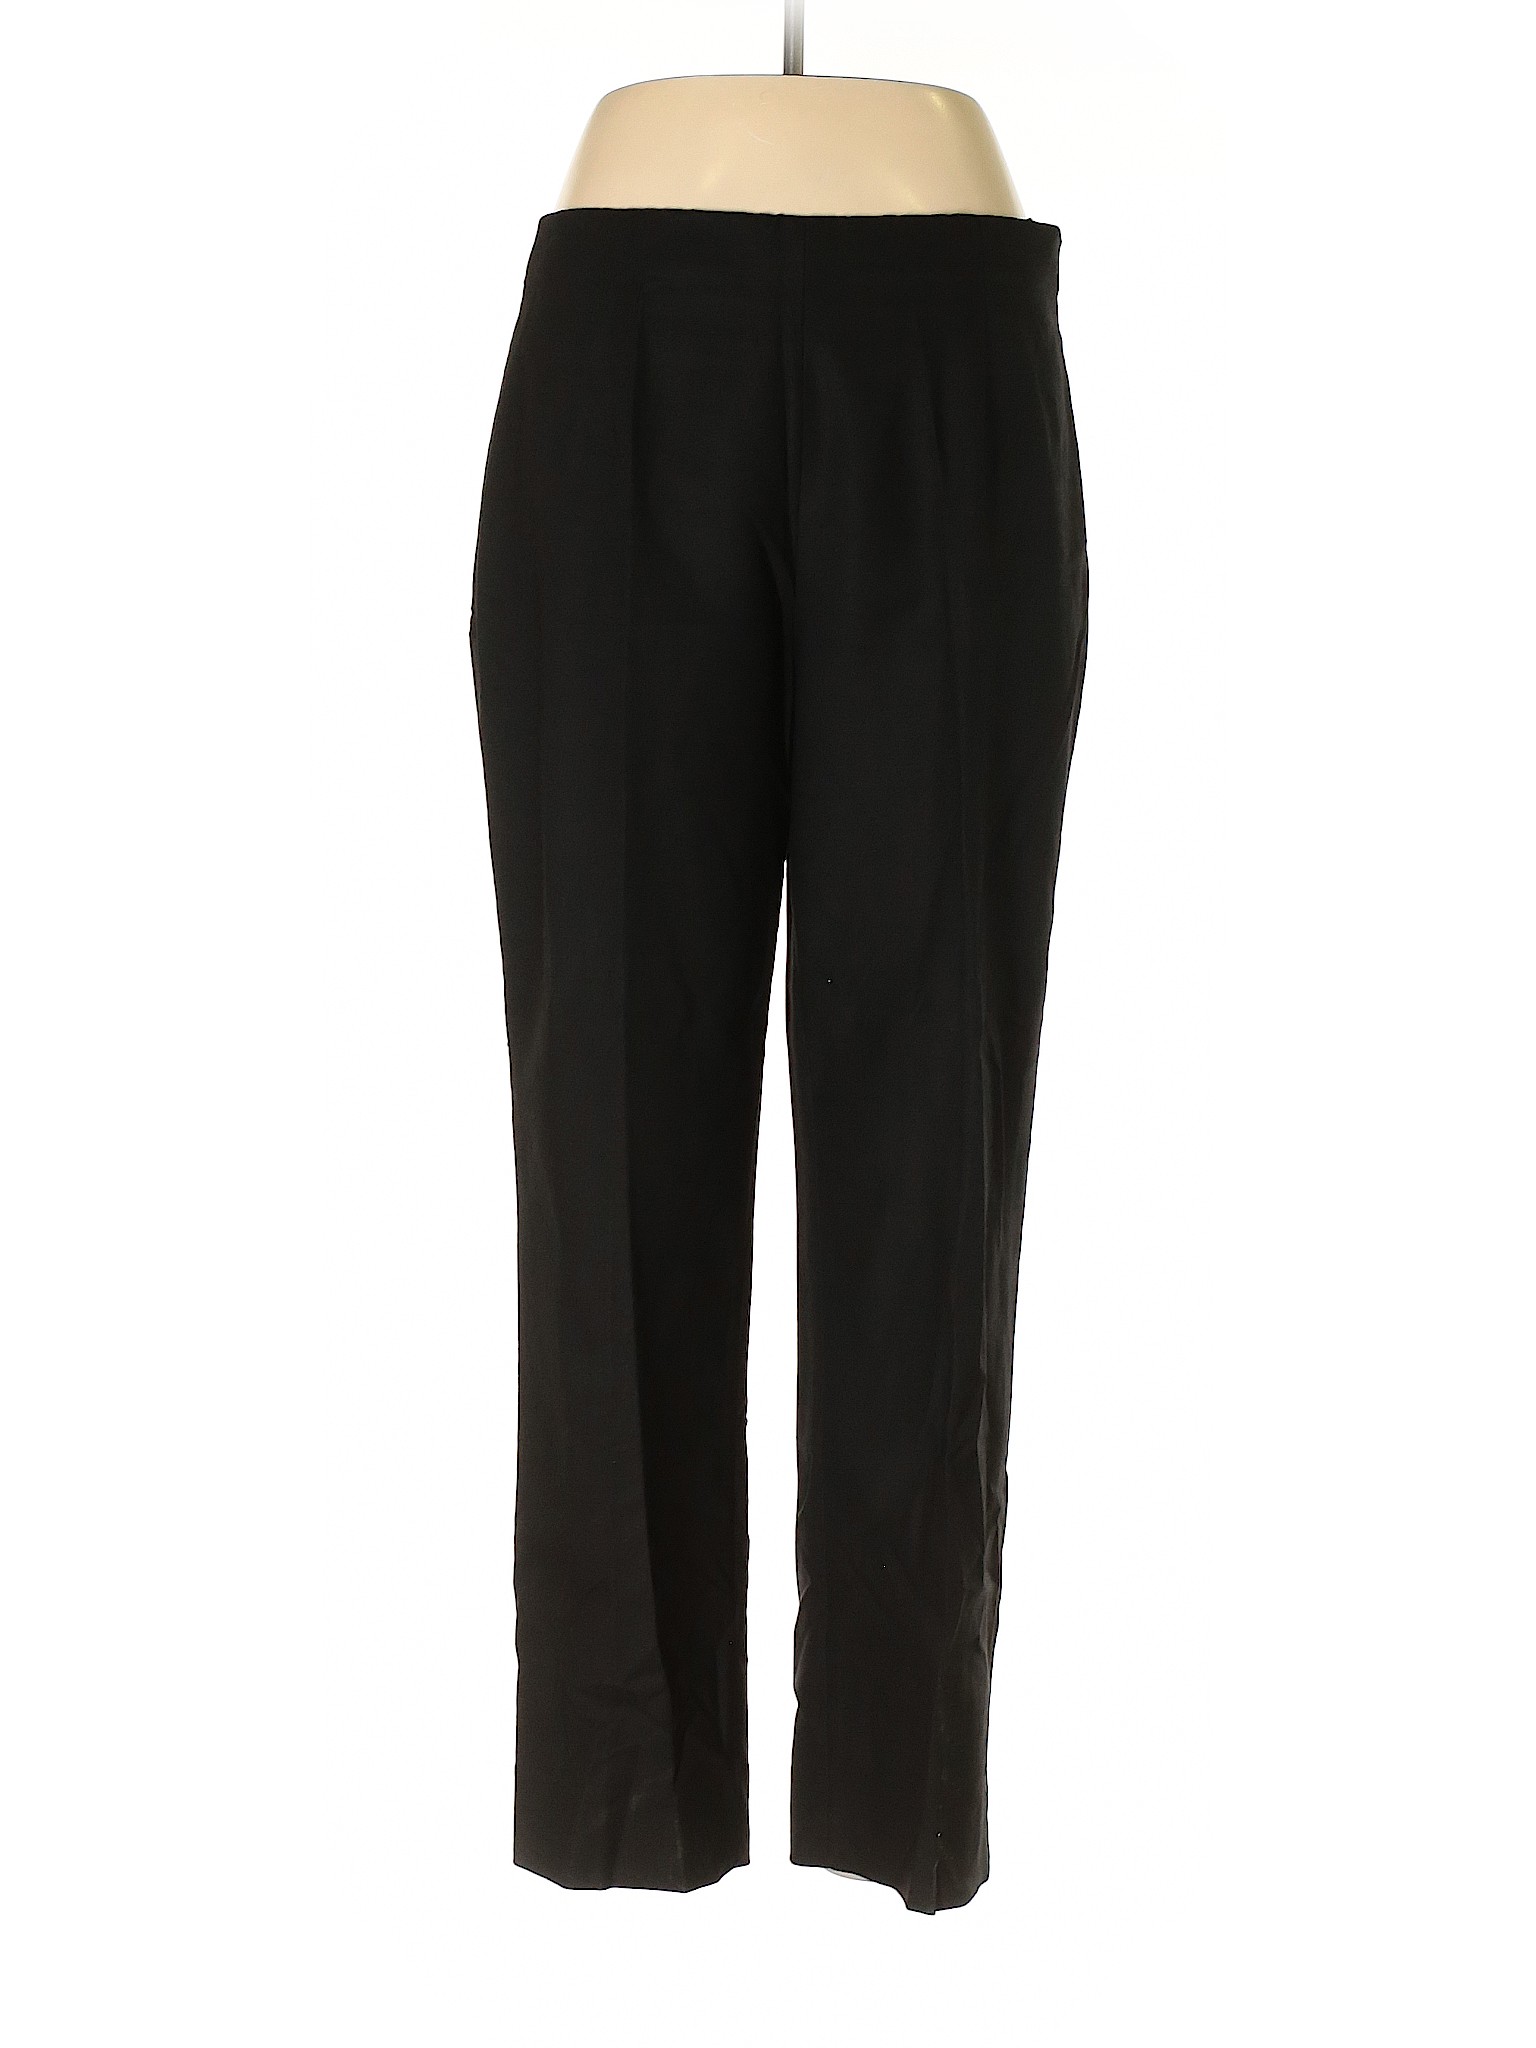 Zozo Women Black Dress Pants 12 | eBay